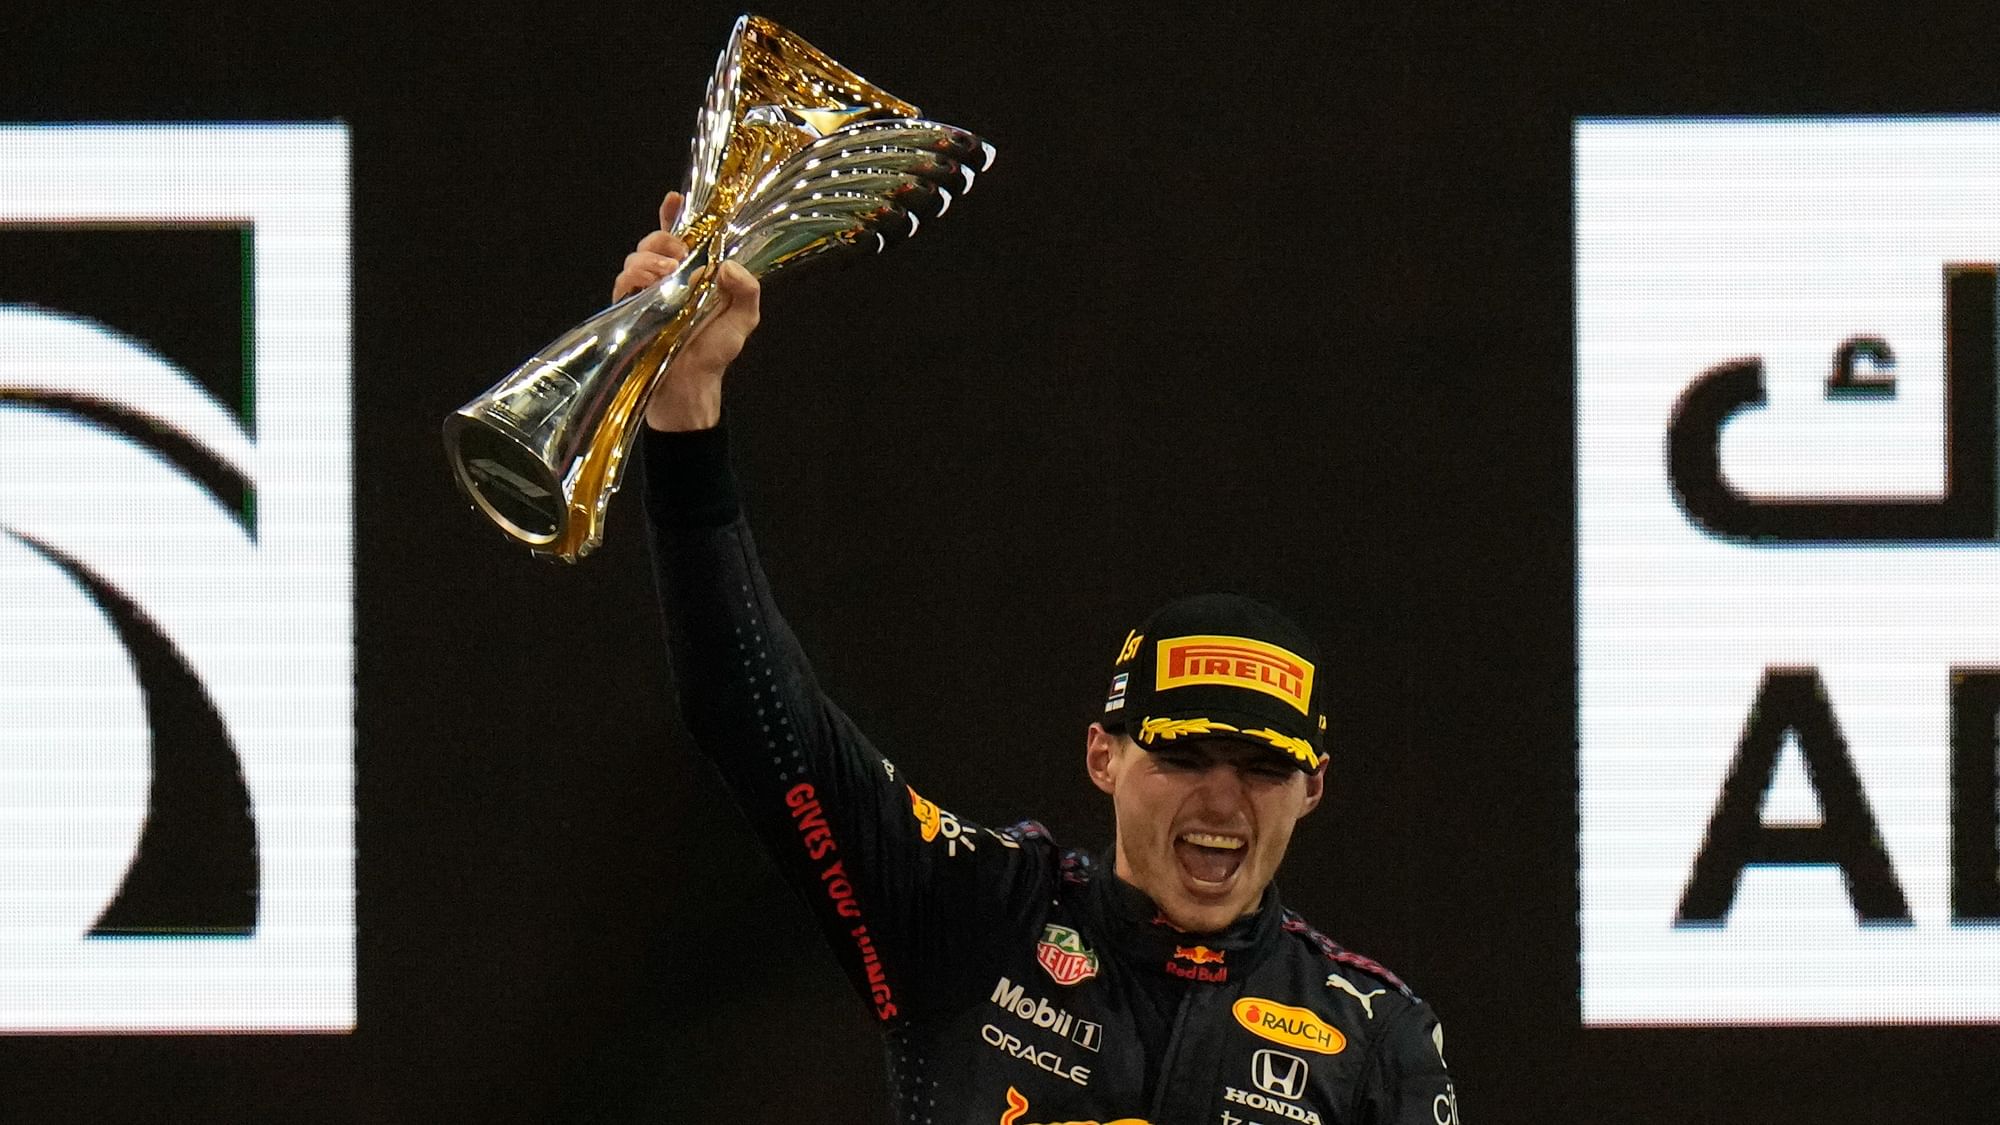 <div class="paragraphs"><p>Max Verstappen celebrates after winning the F1 title.</p></div>